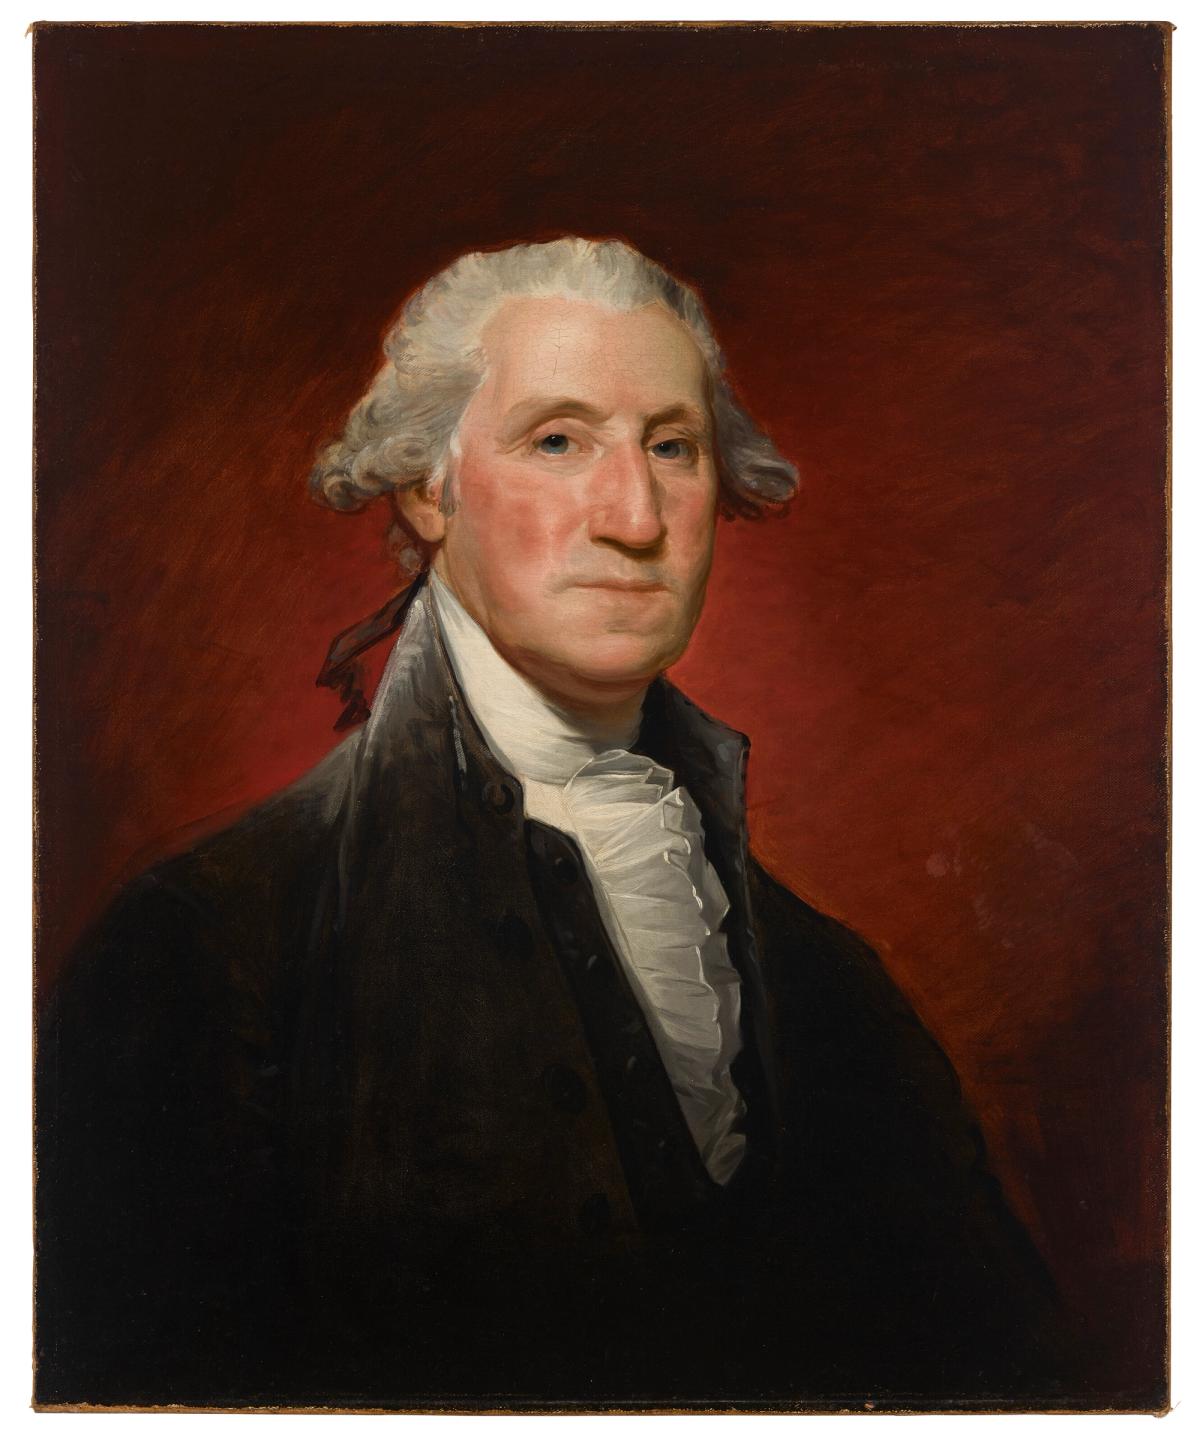 Gilbert Stuart's portrait of George Washington, painted during the president's lifetime Courtesy Christie's